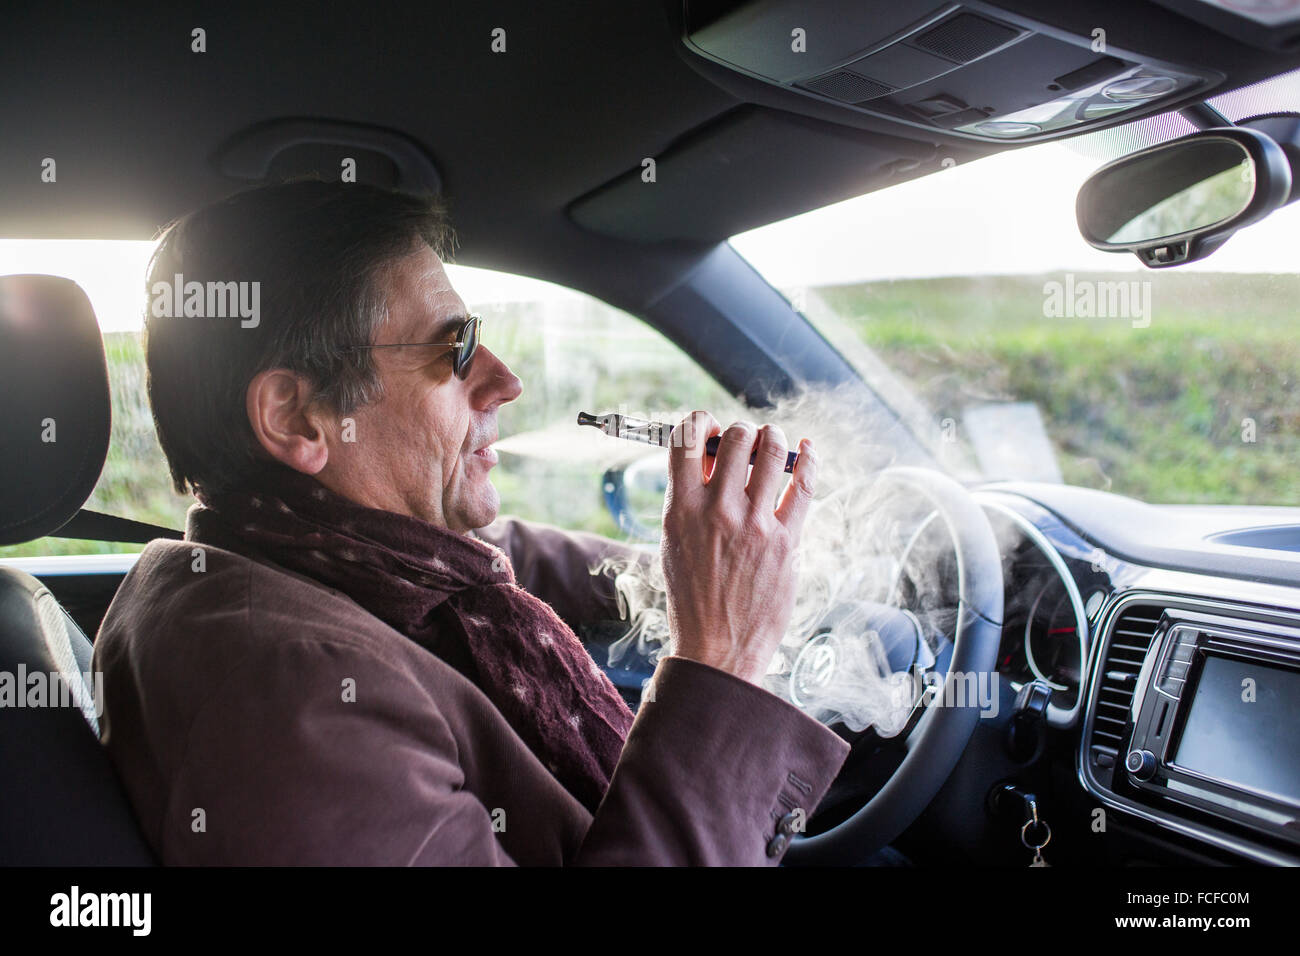 Man smoking electronic cigarette while drivingv Stock Photo